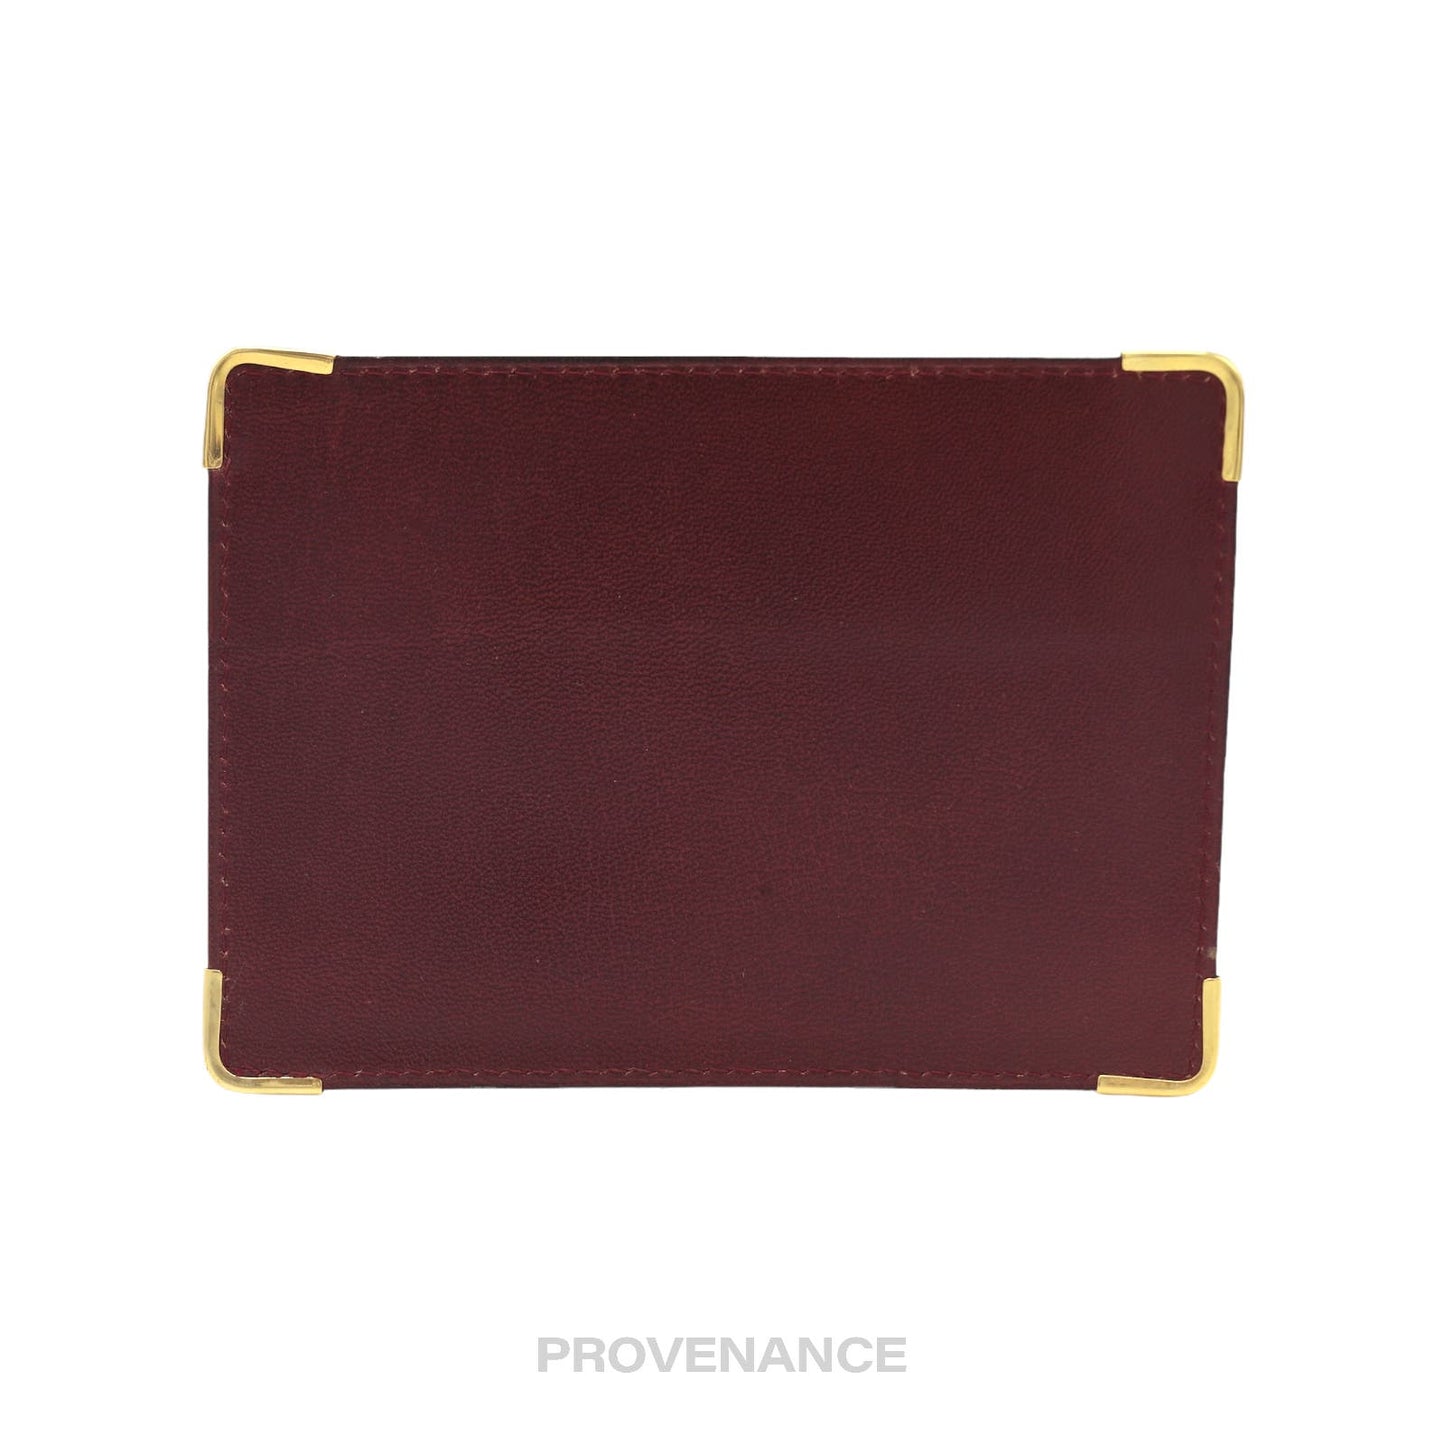 🔴 Rolex Card Holder Wallet - Burgundy Calfskin Leather